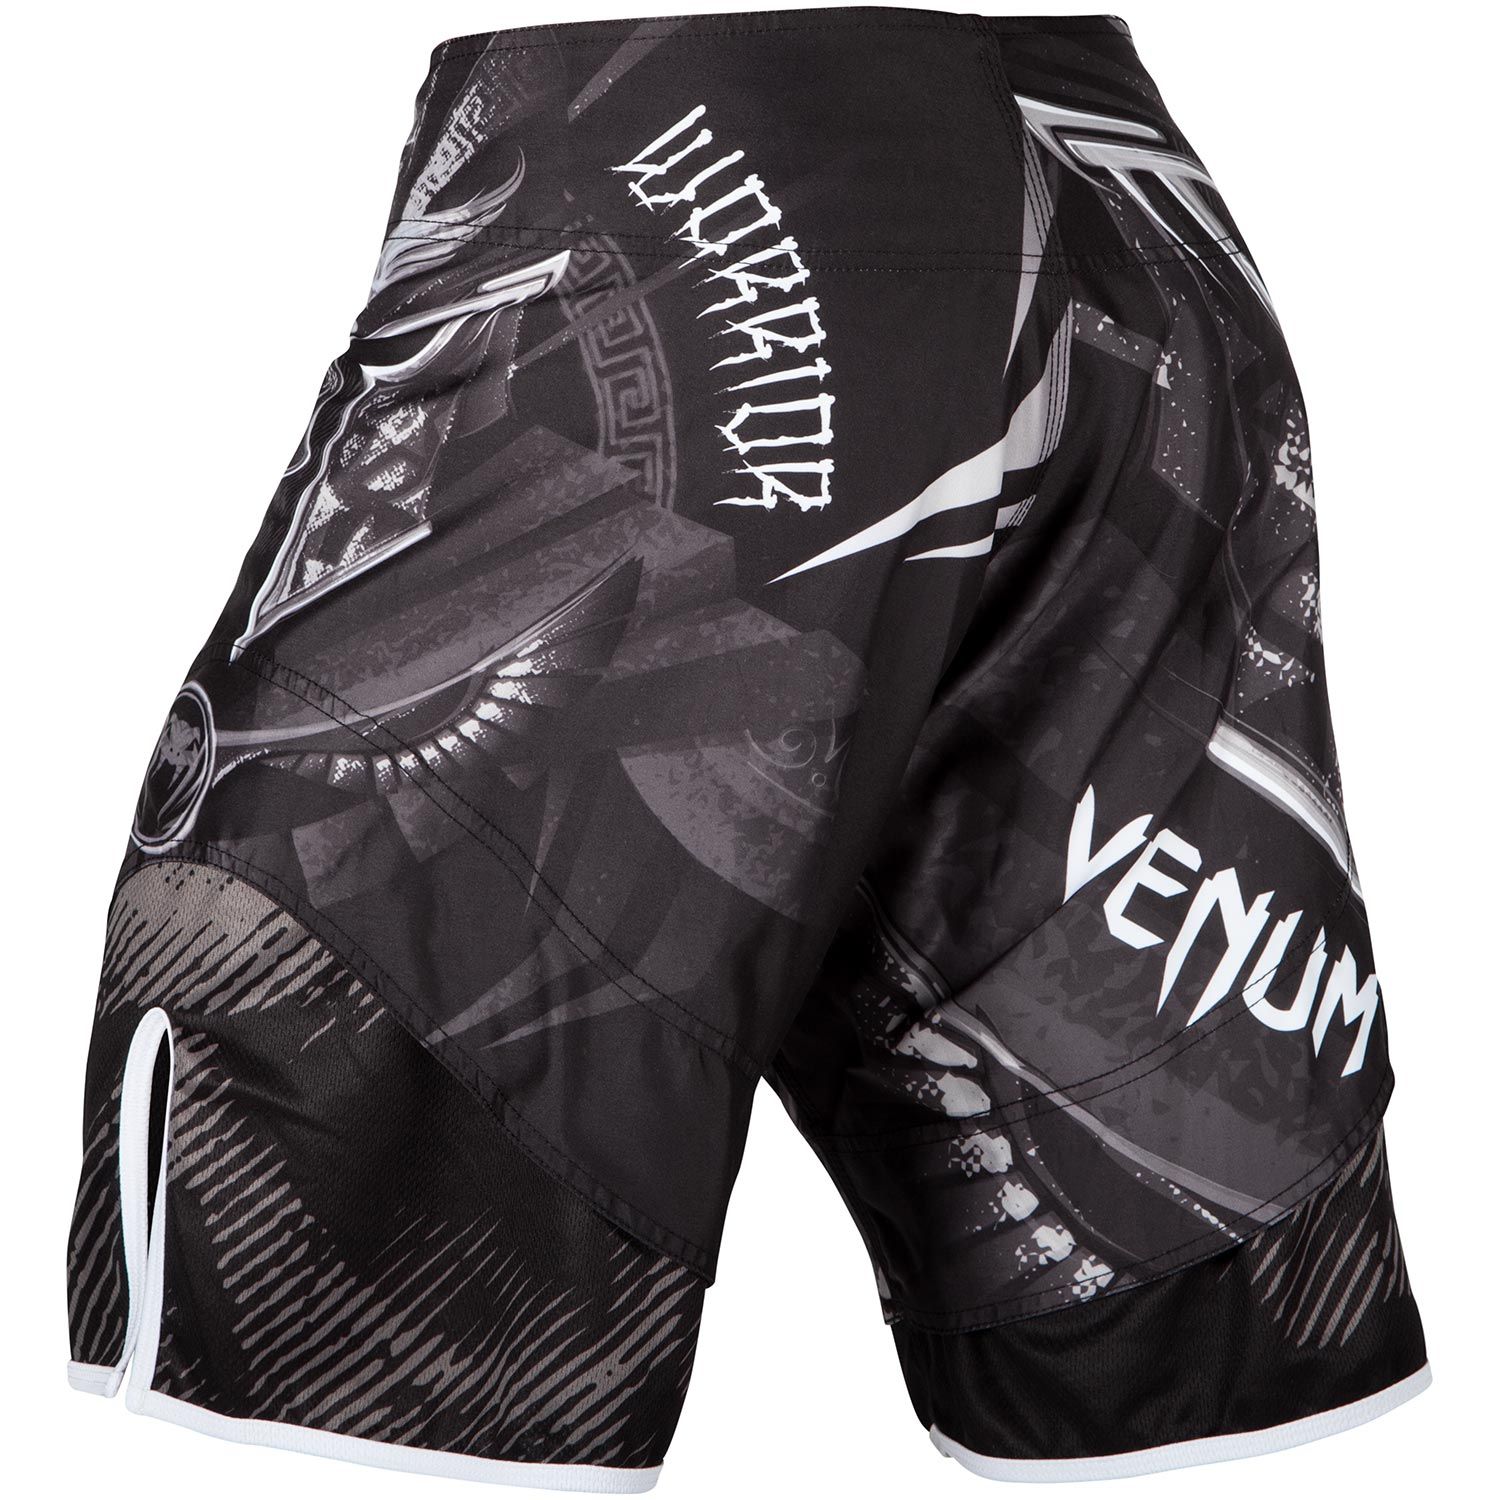 Shorts Venum Gladiator para MMA, Muay thai, Jiujitsu